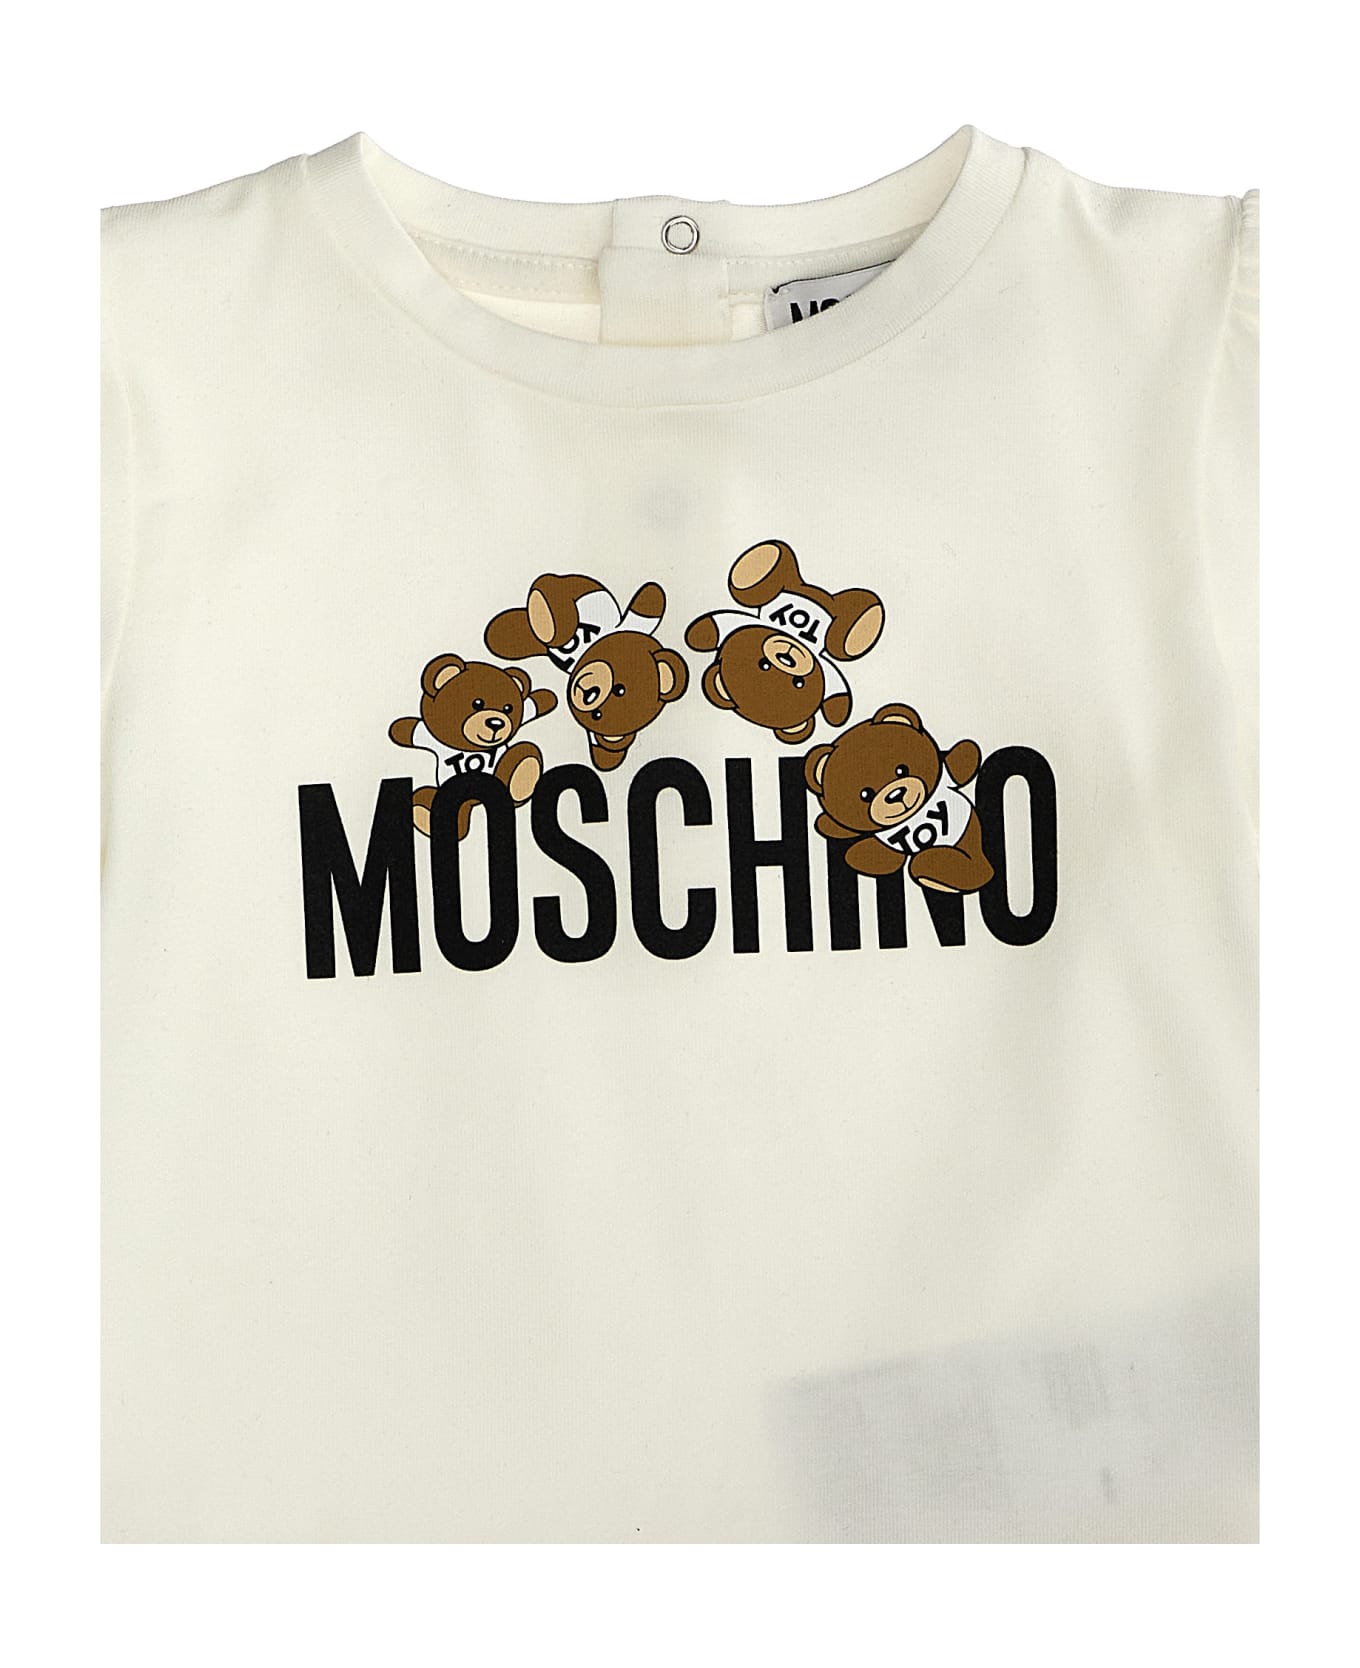 Moschino T-shirt + Shorts - Pink